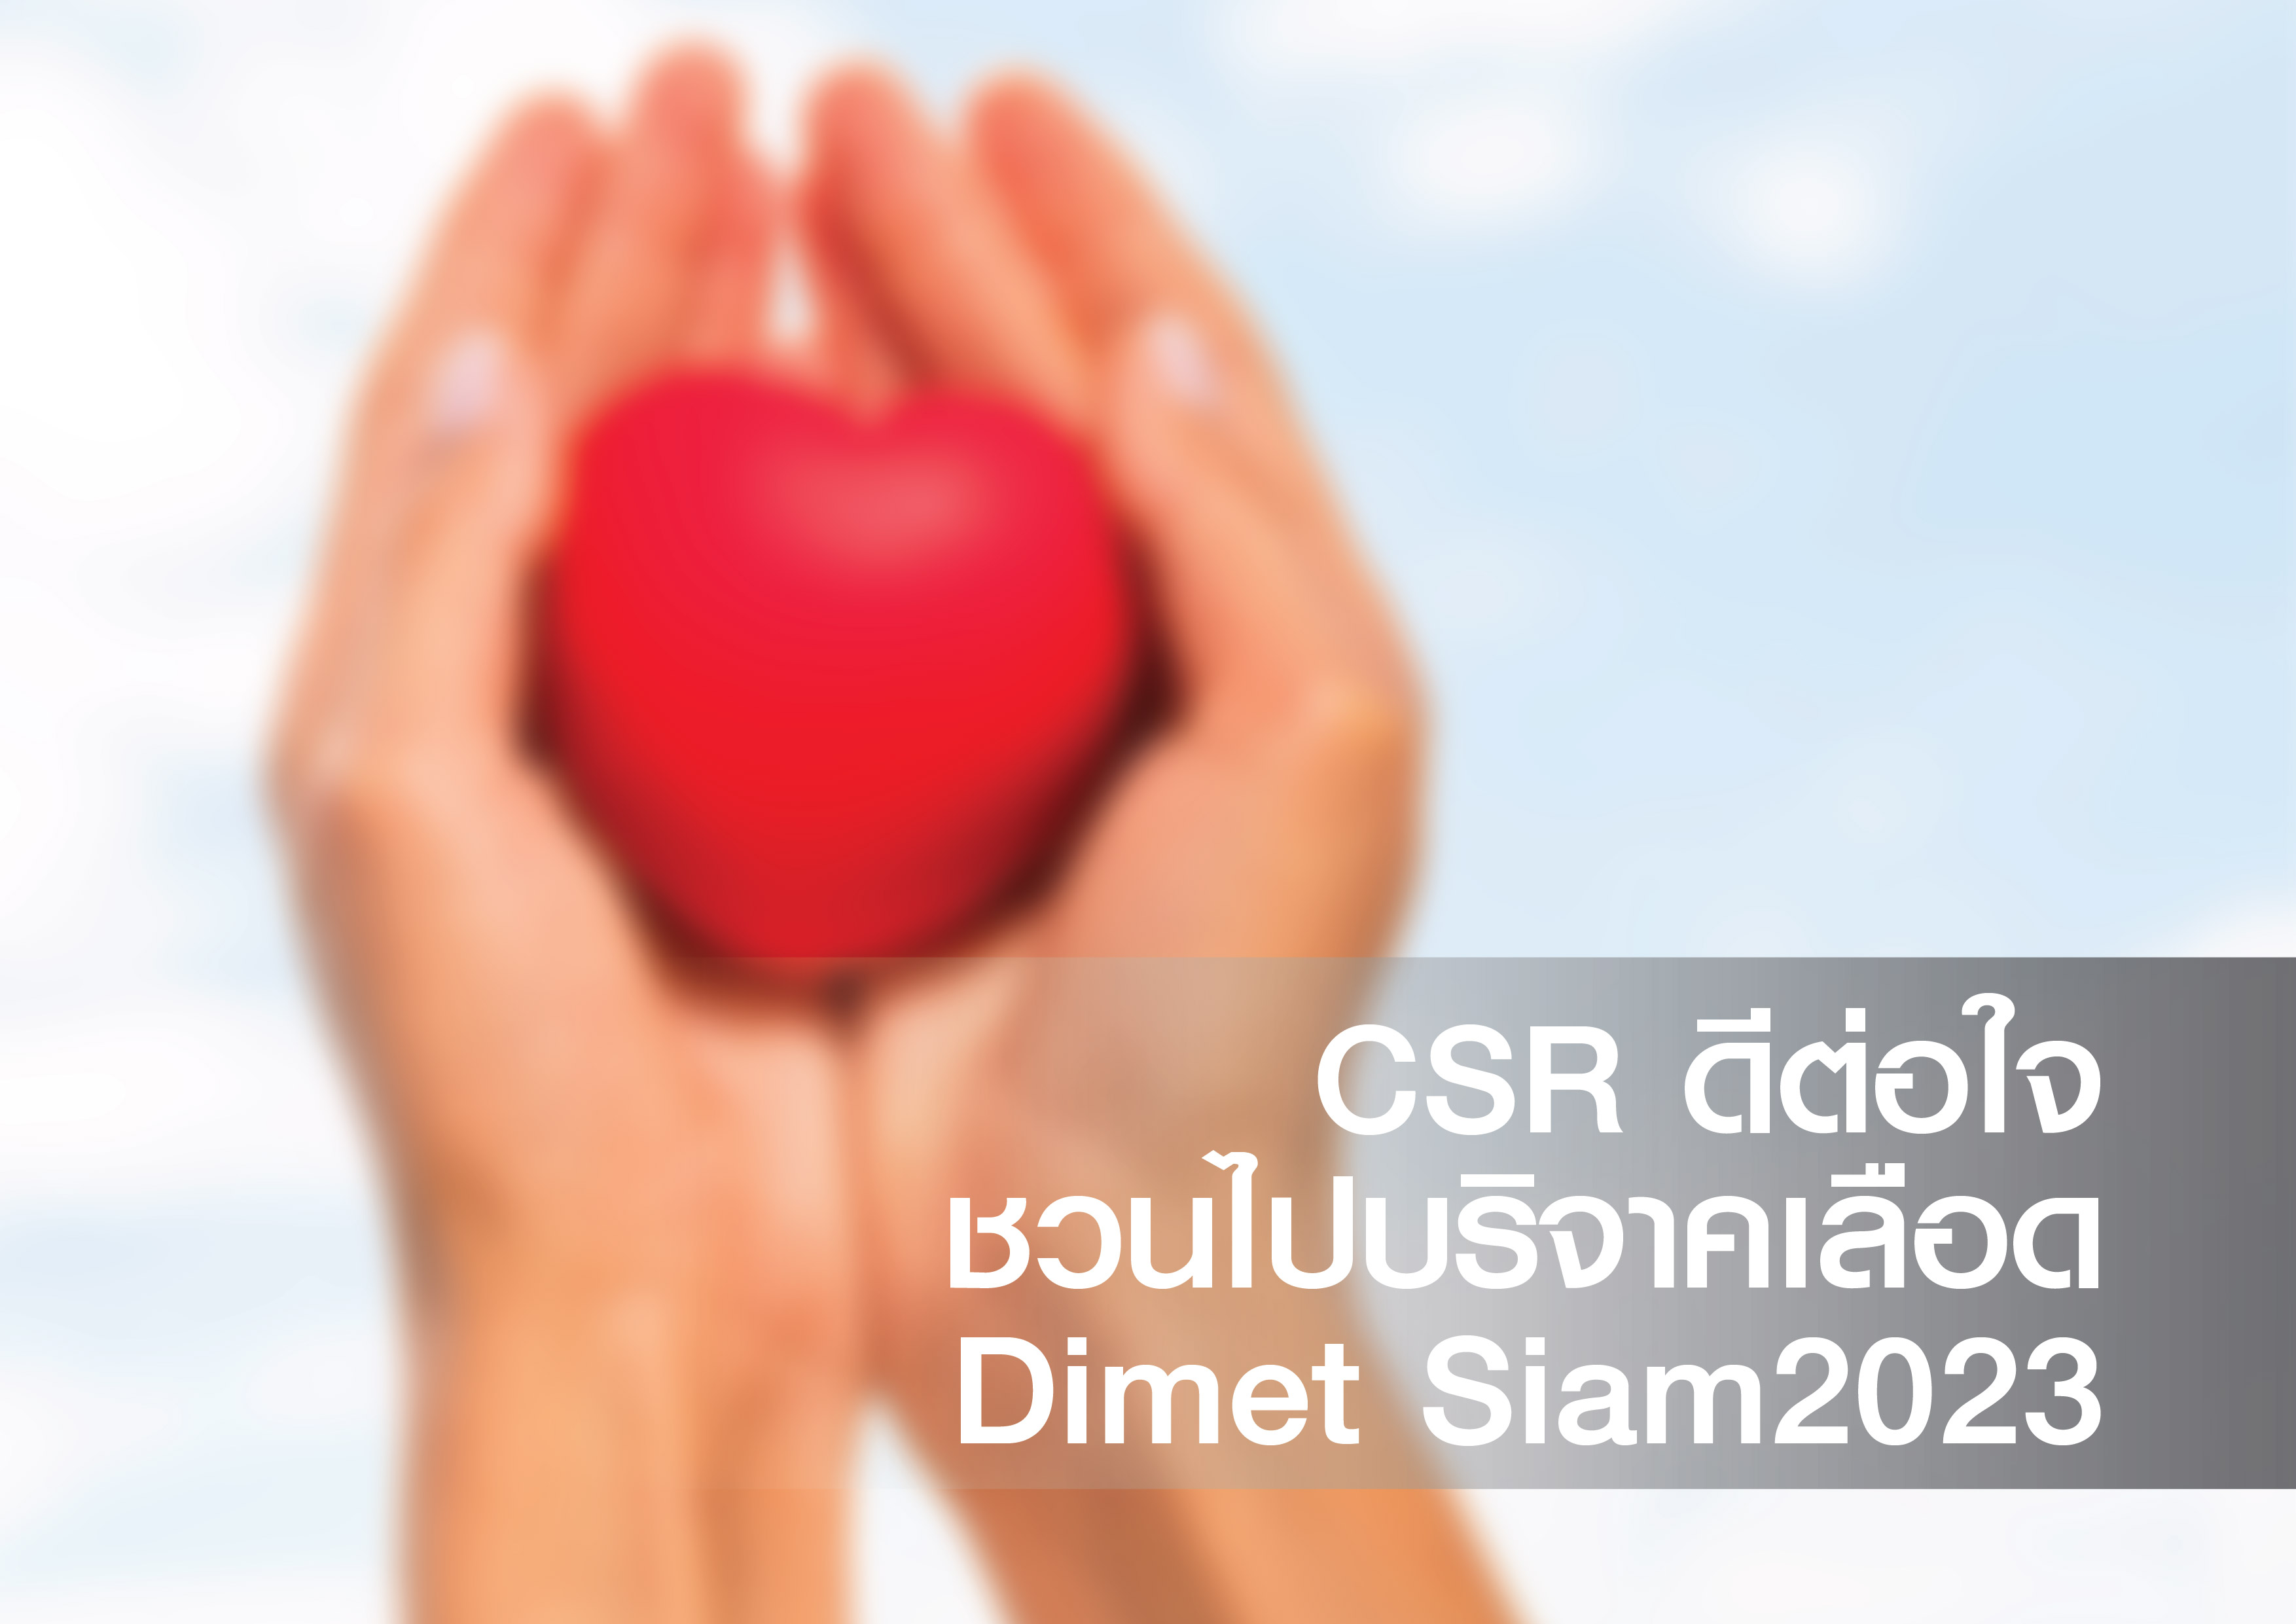 CSR blood donation 2023